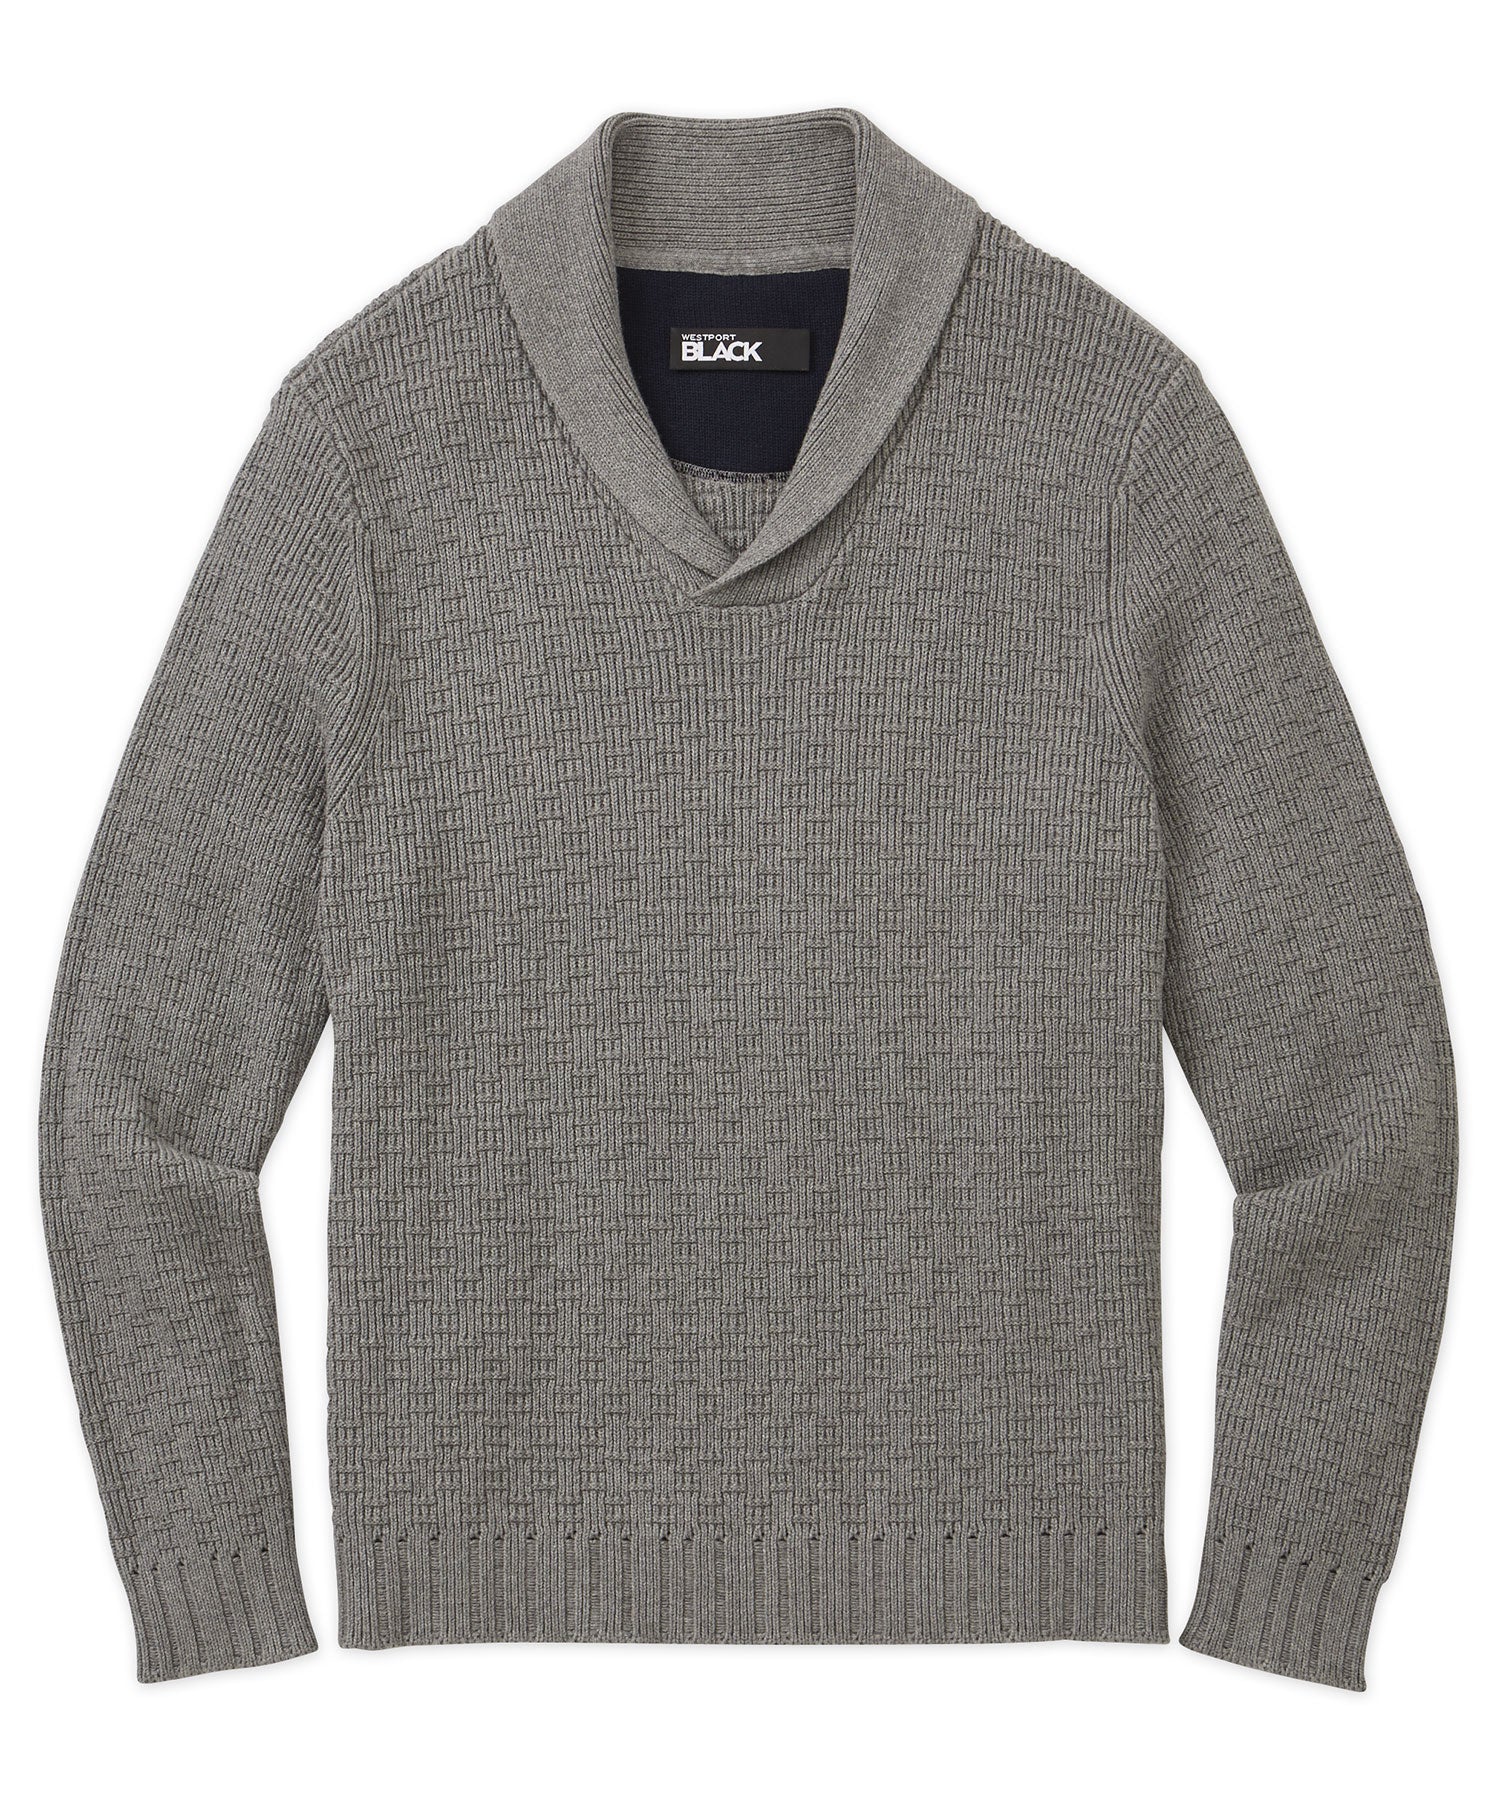 Westport Black Shawl Collar Sweater